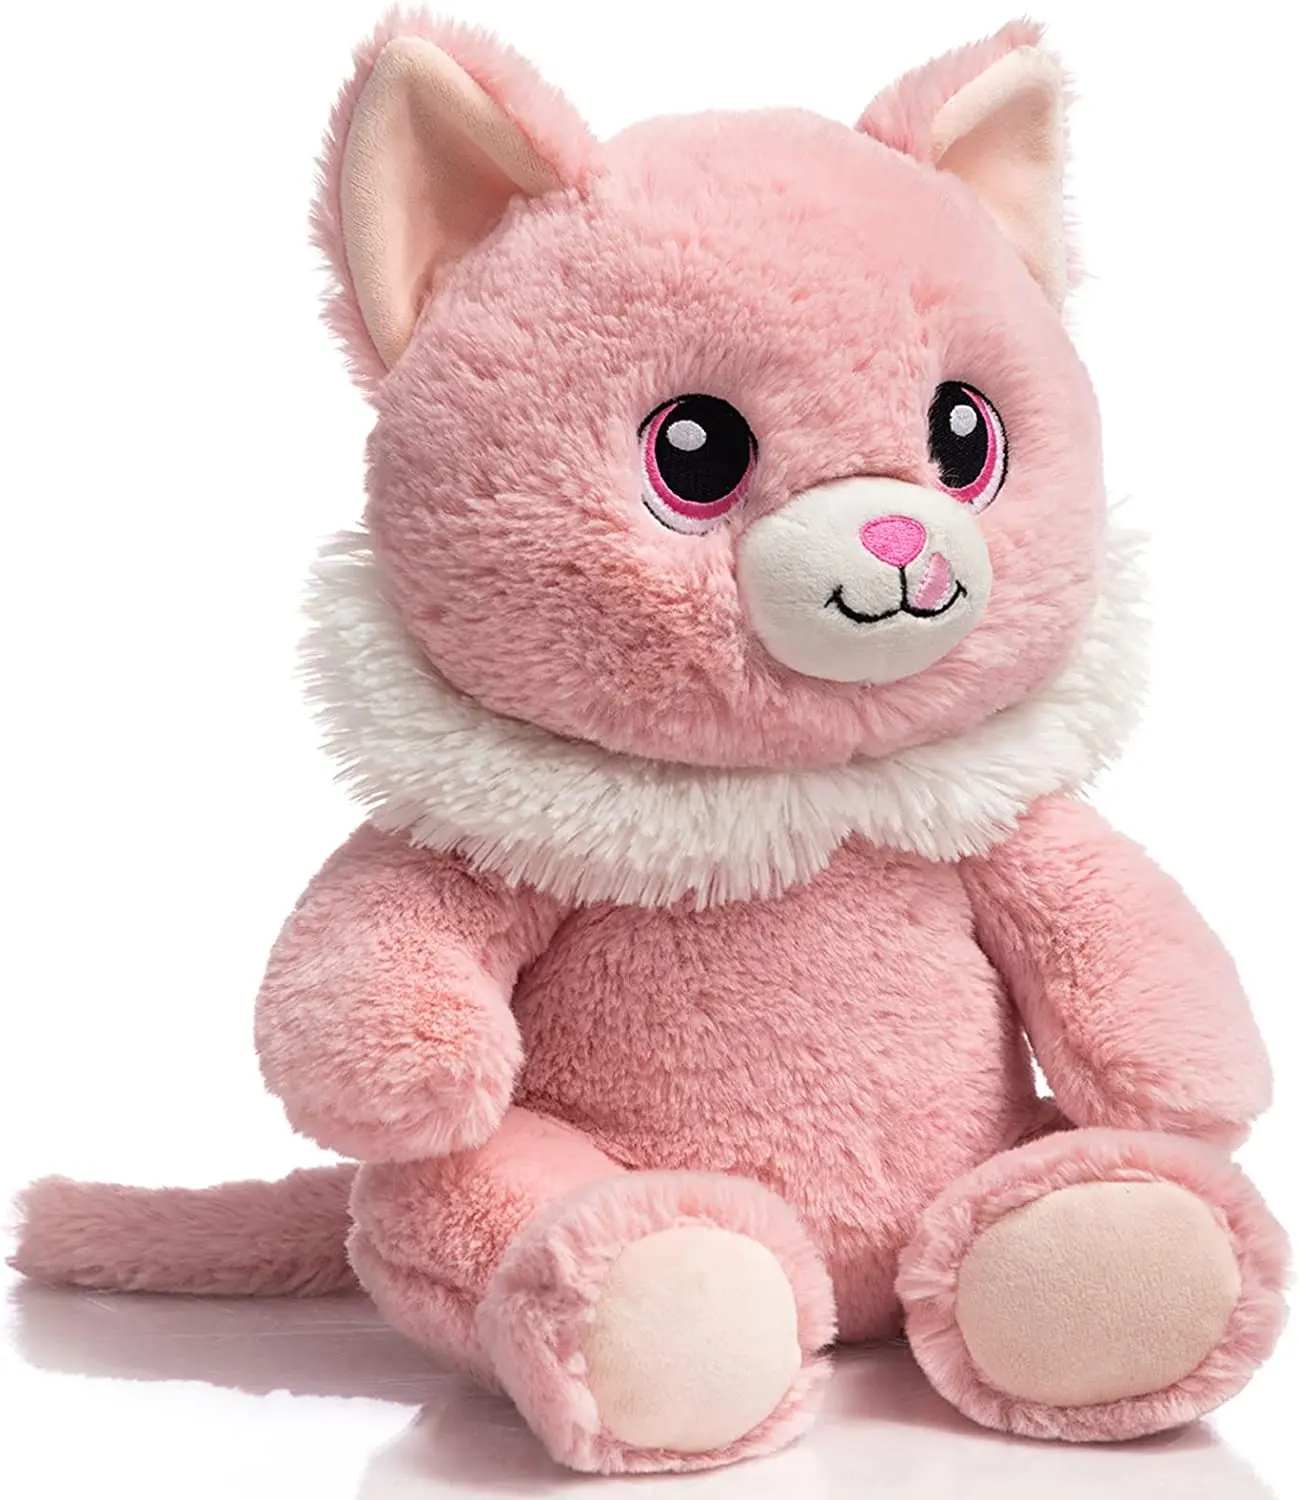 Pink Cat Stuffed Animal Pink Kitty Cute Kitten Plush Toy Gift for Kids 11 inch